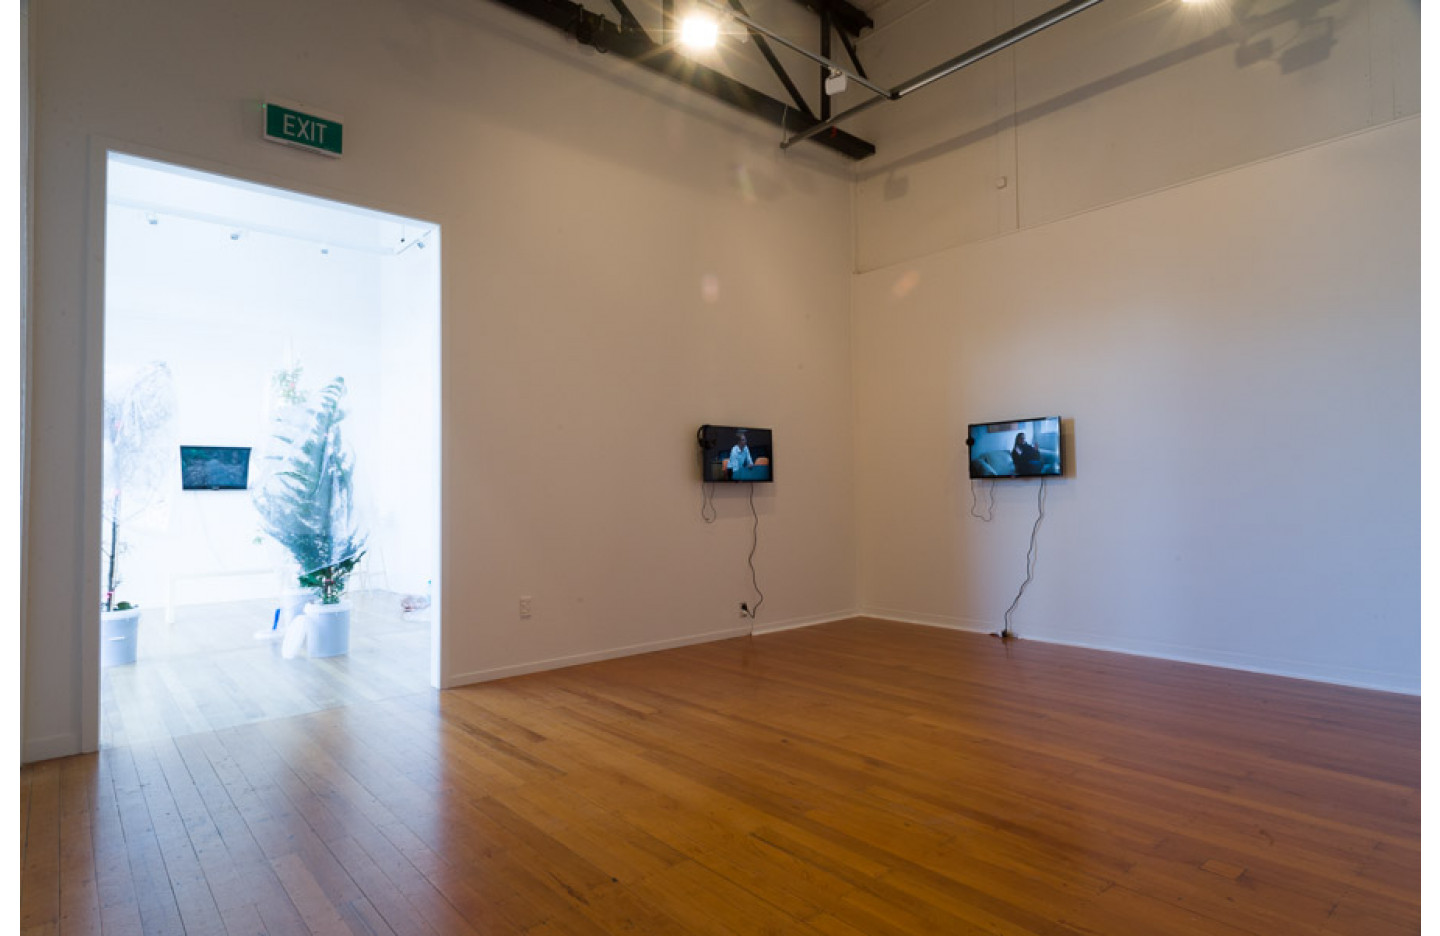 Public Good, Ramp Gallery (2013)